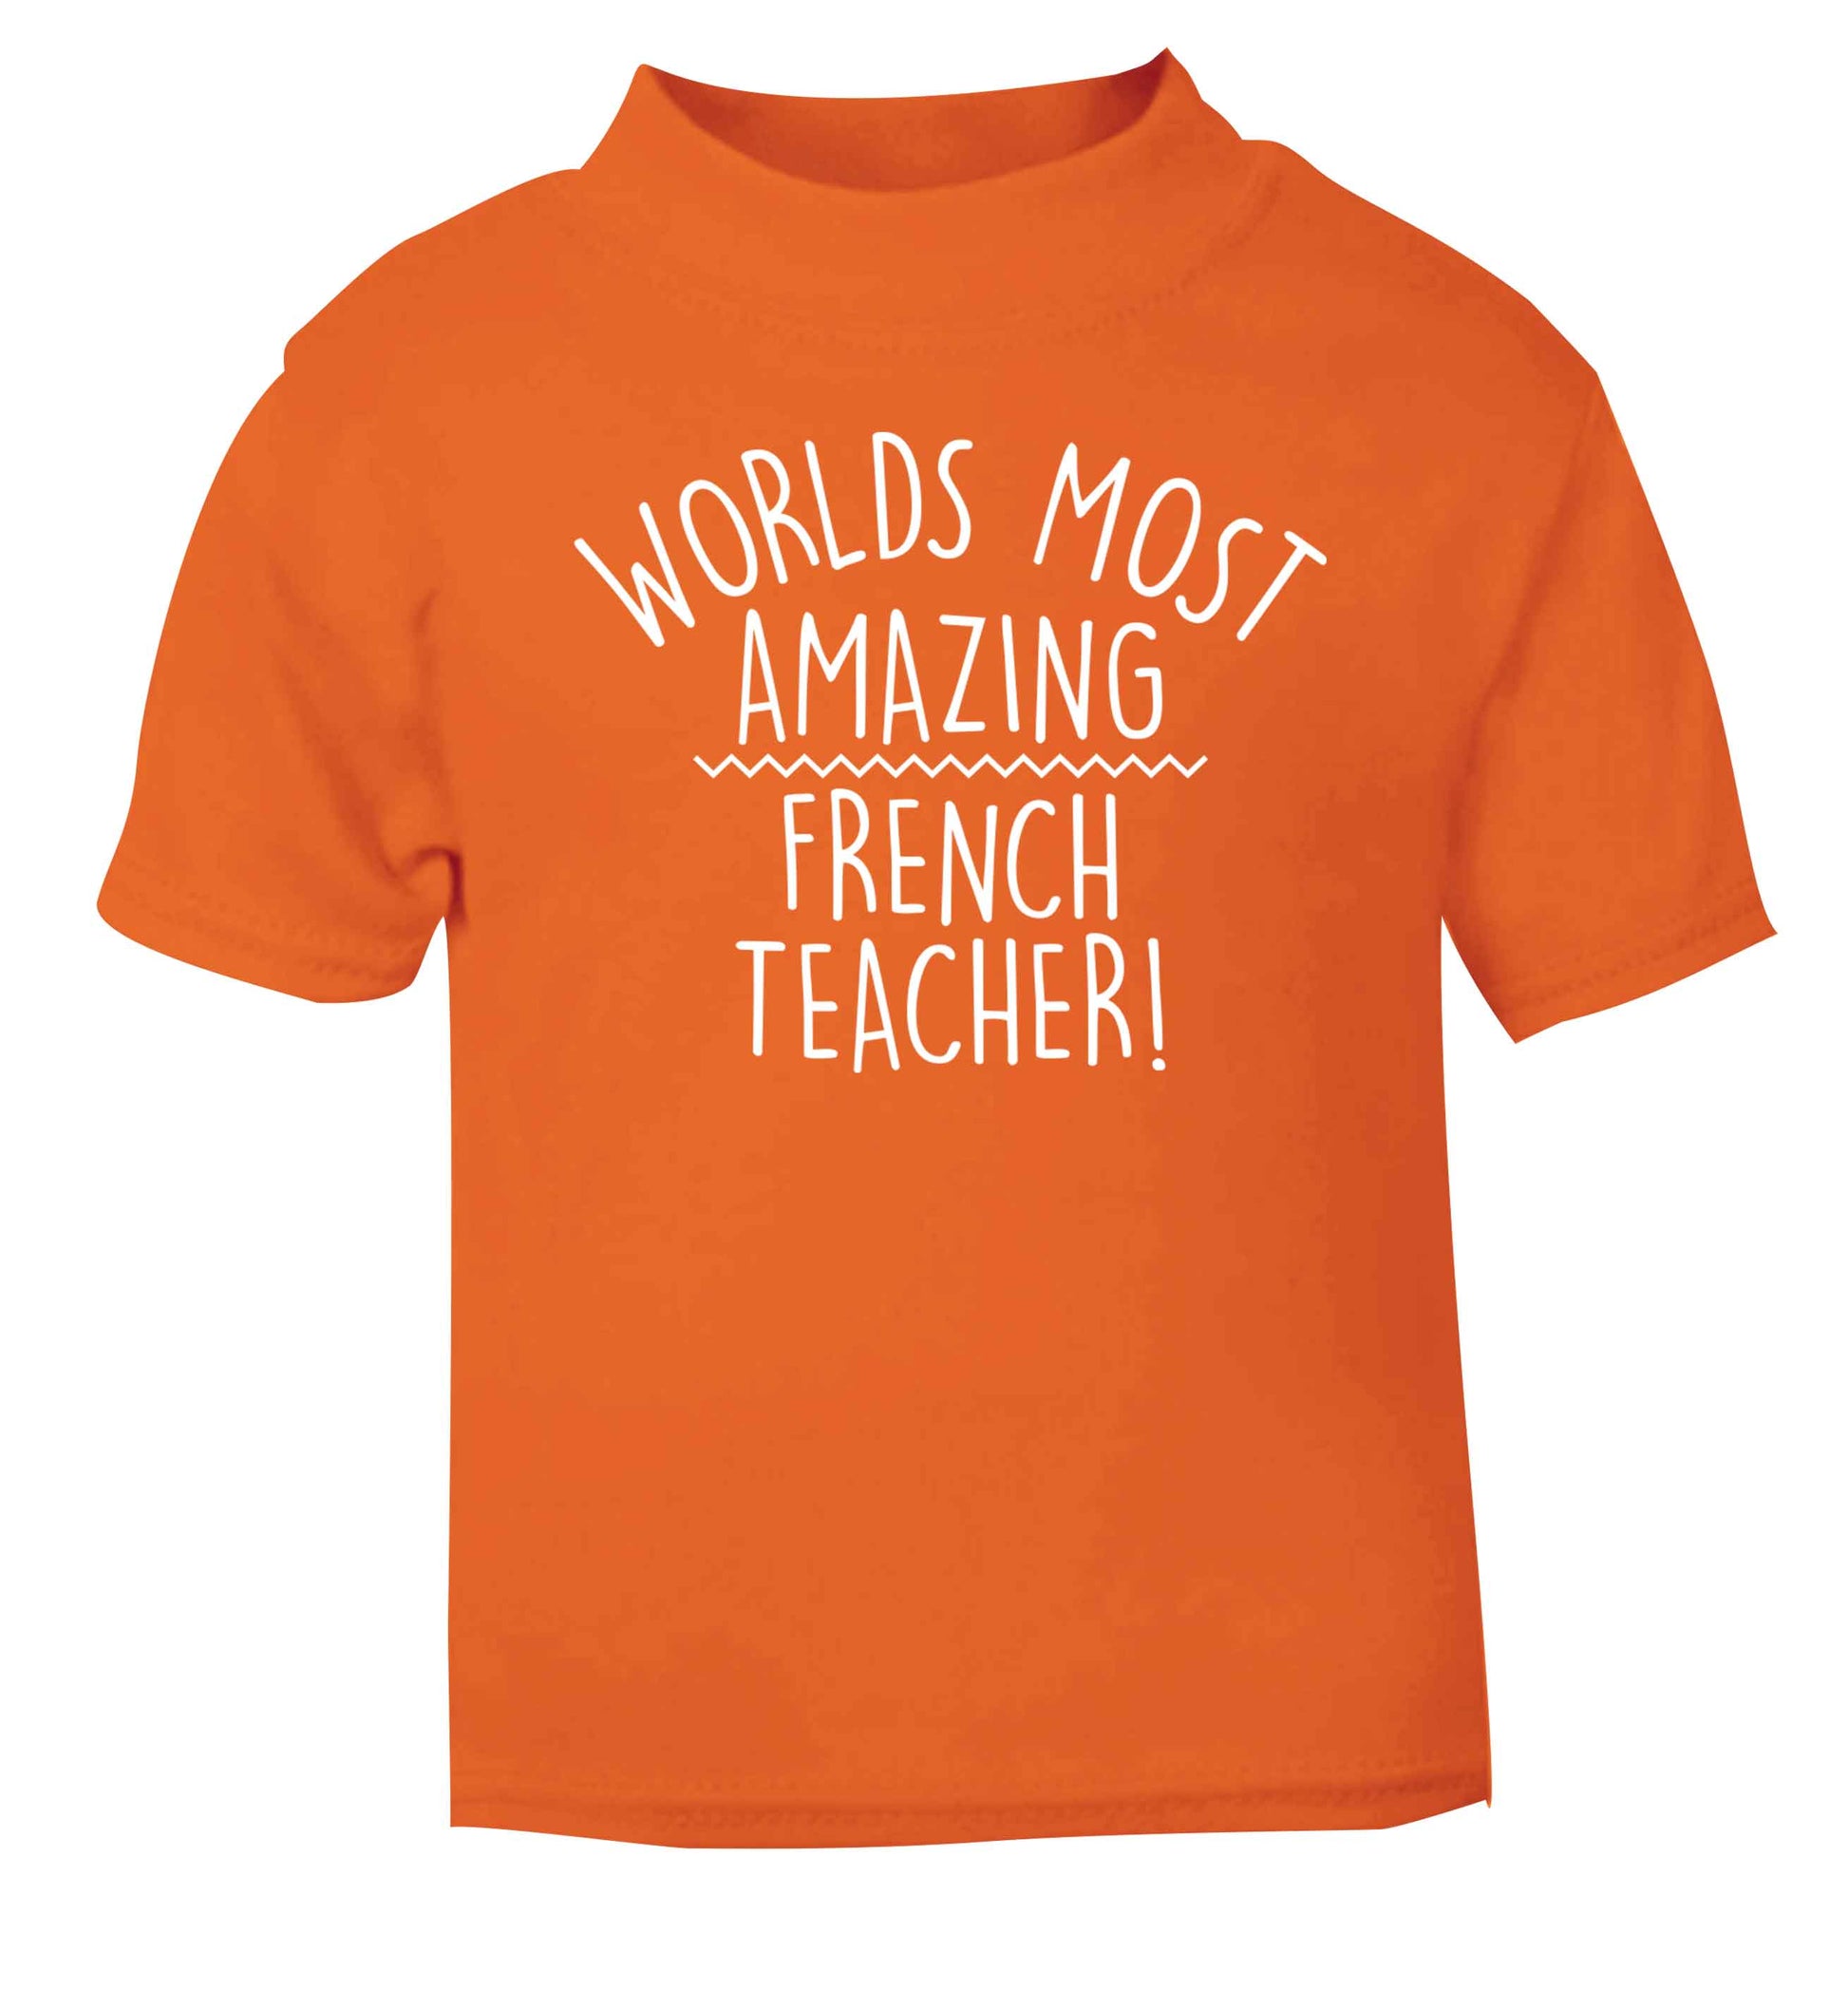 Worlds most amazing French teacher orange baby toddler Tshirt 2 Years